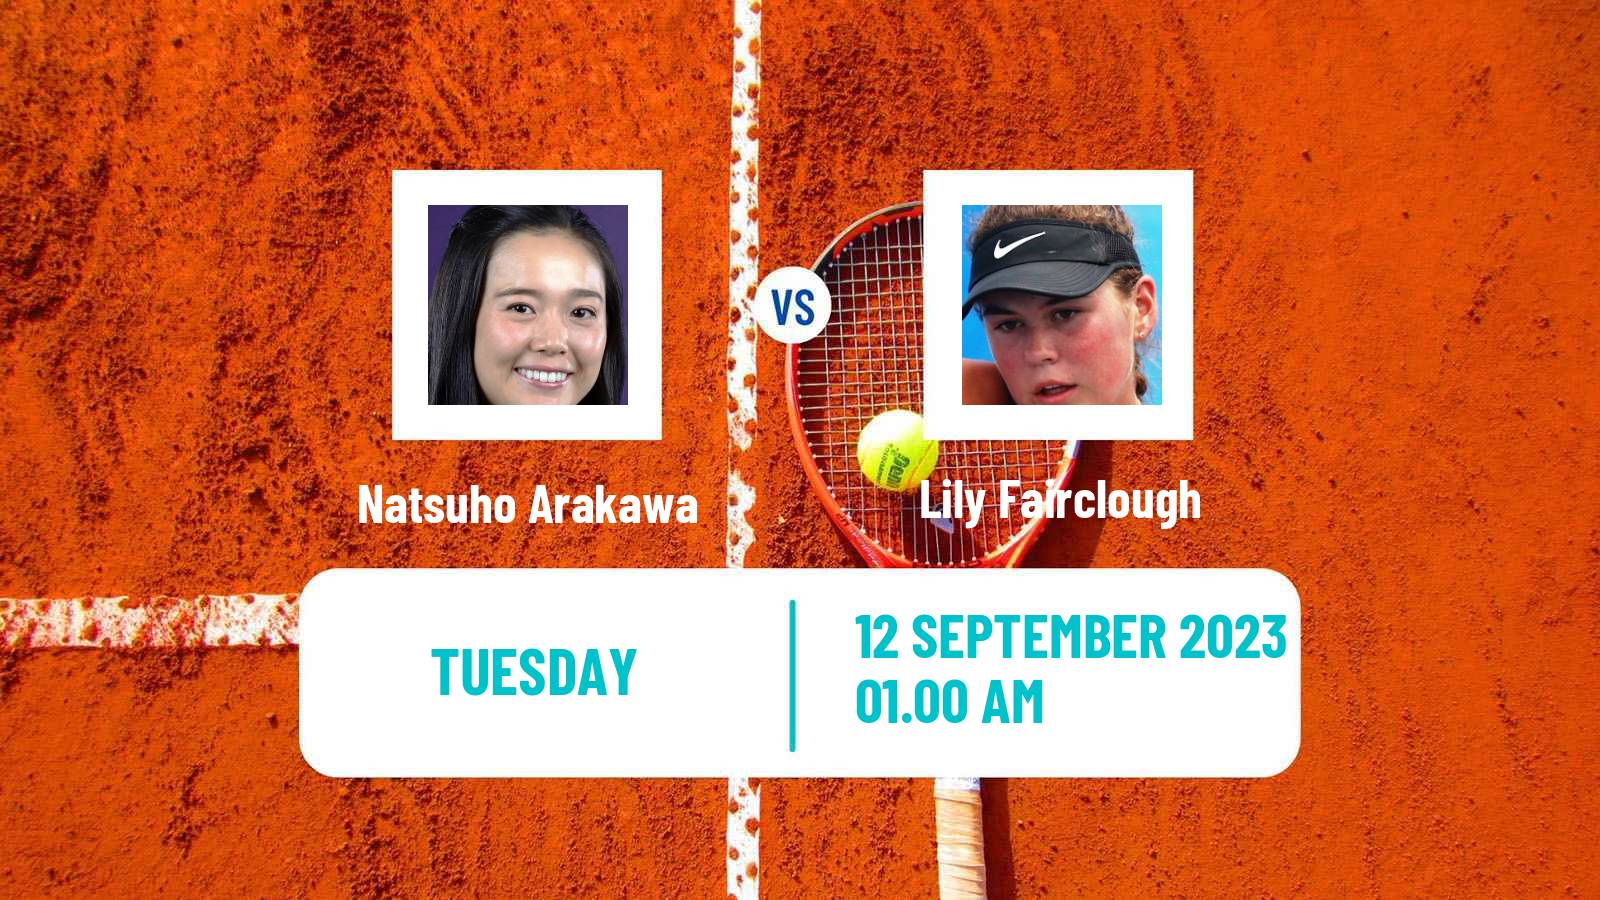 Tennis ITF W25 Perth Women 2023 Natsuho Arakawa - Lily Fairclough